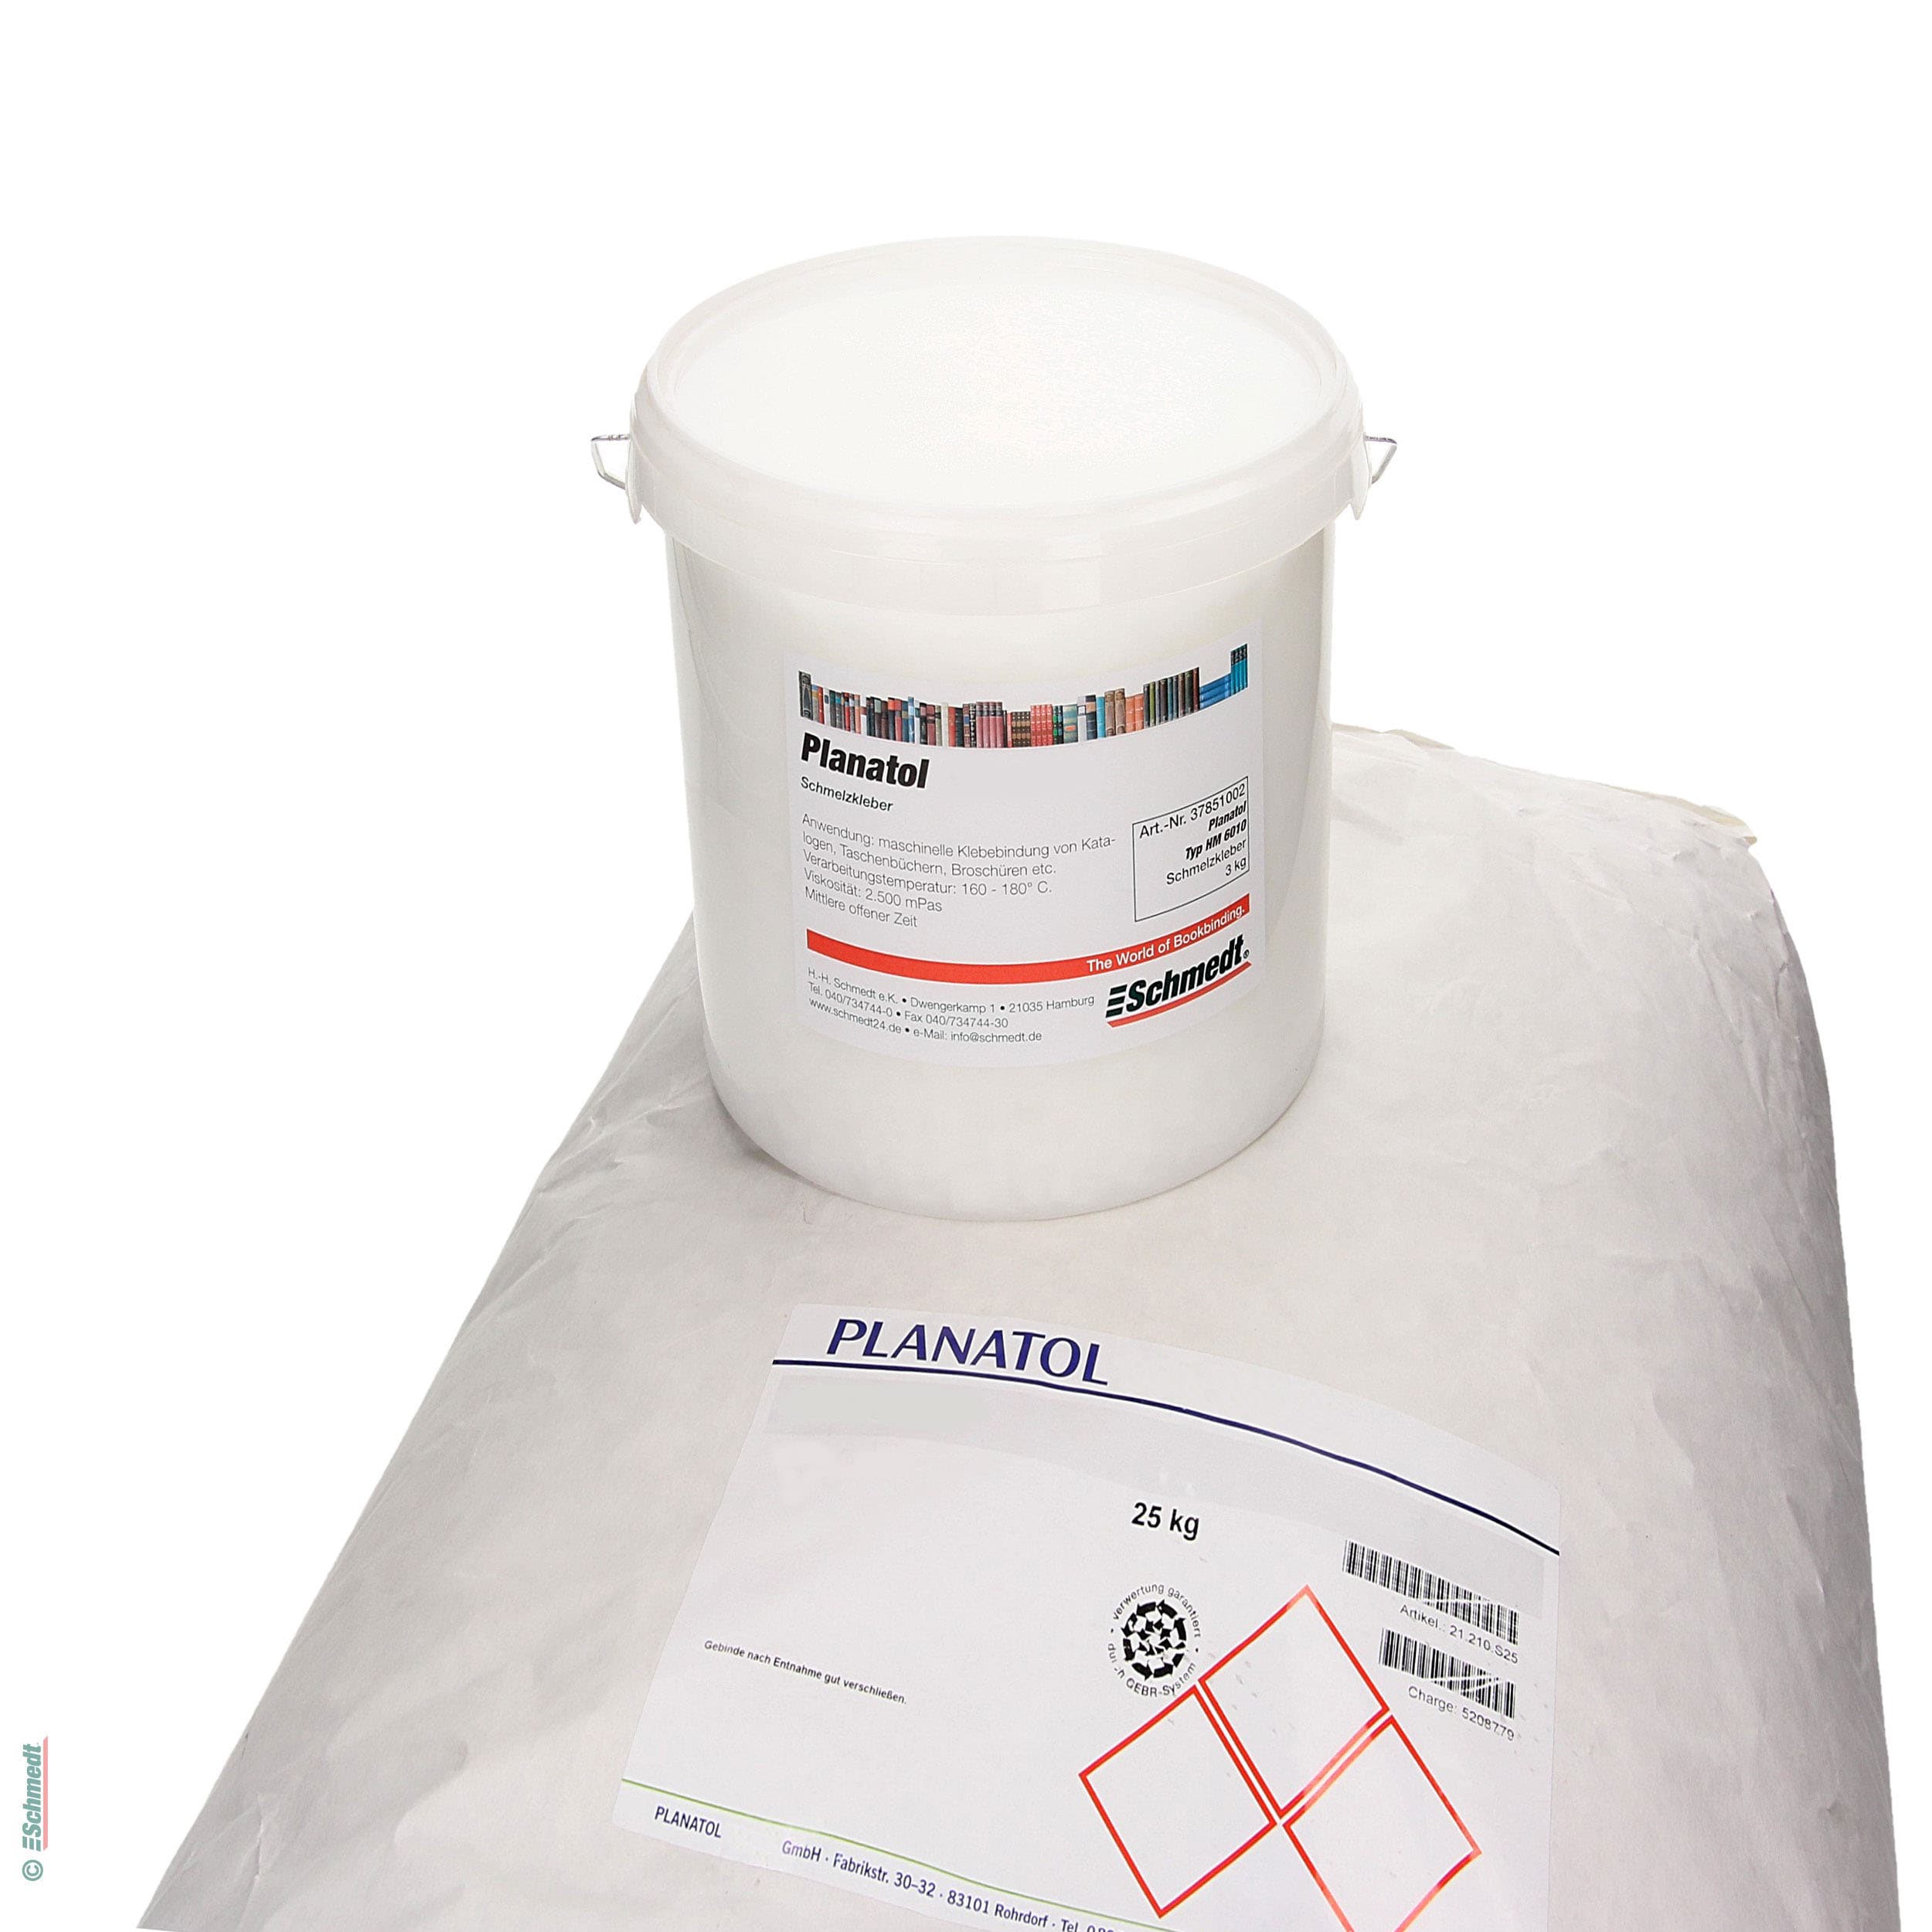 Planamelt R - hotmelt glue - Contents Bag / 25 kgs - Allrounder for fan-binding. Suitable for fan-binding books, catalogues, brochures etc. ...